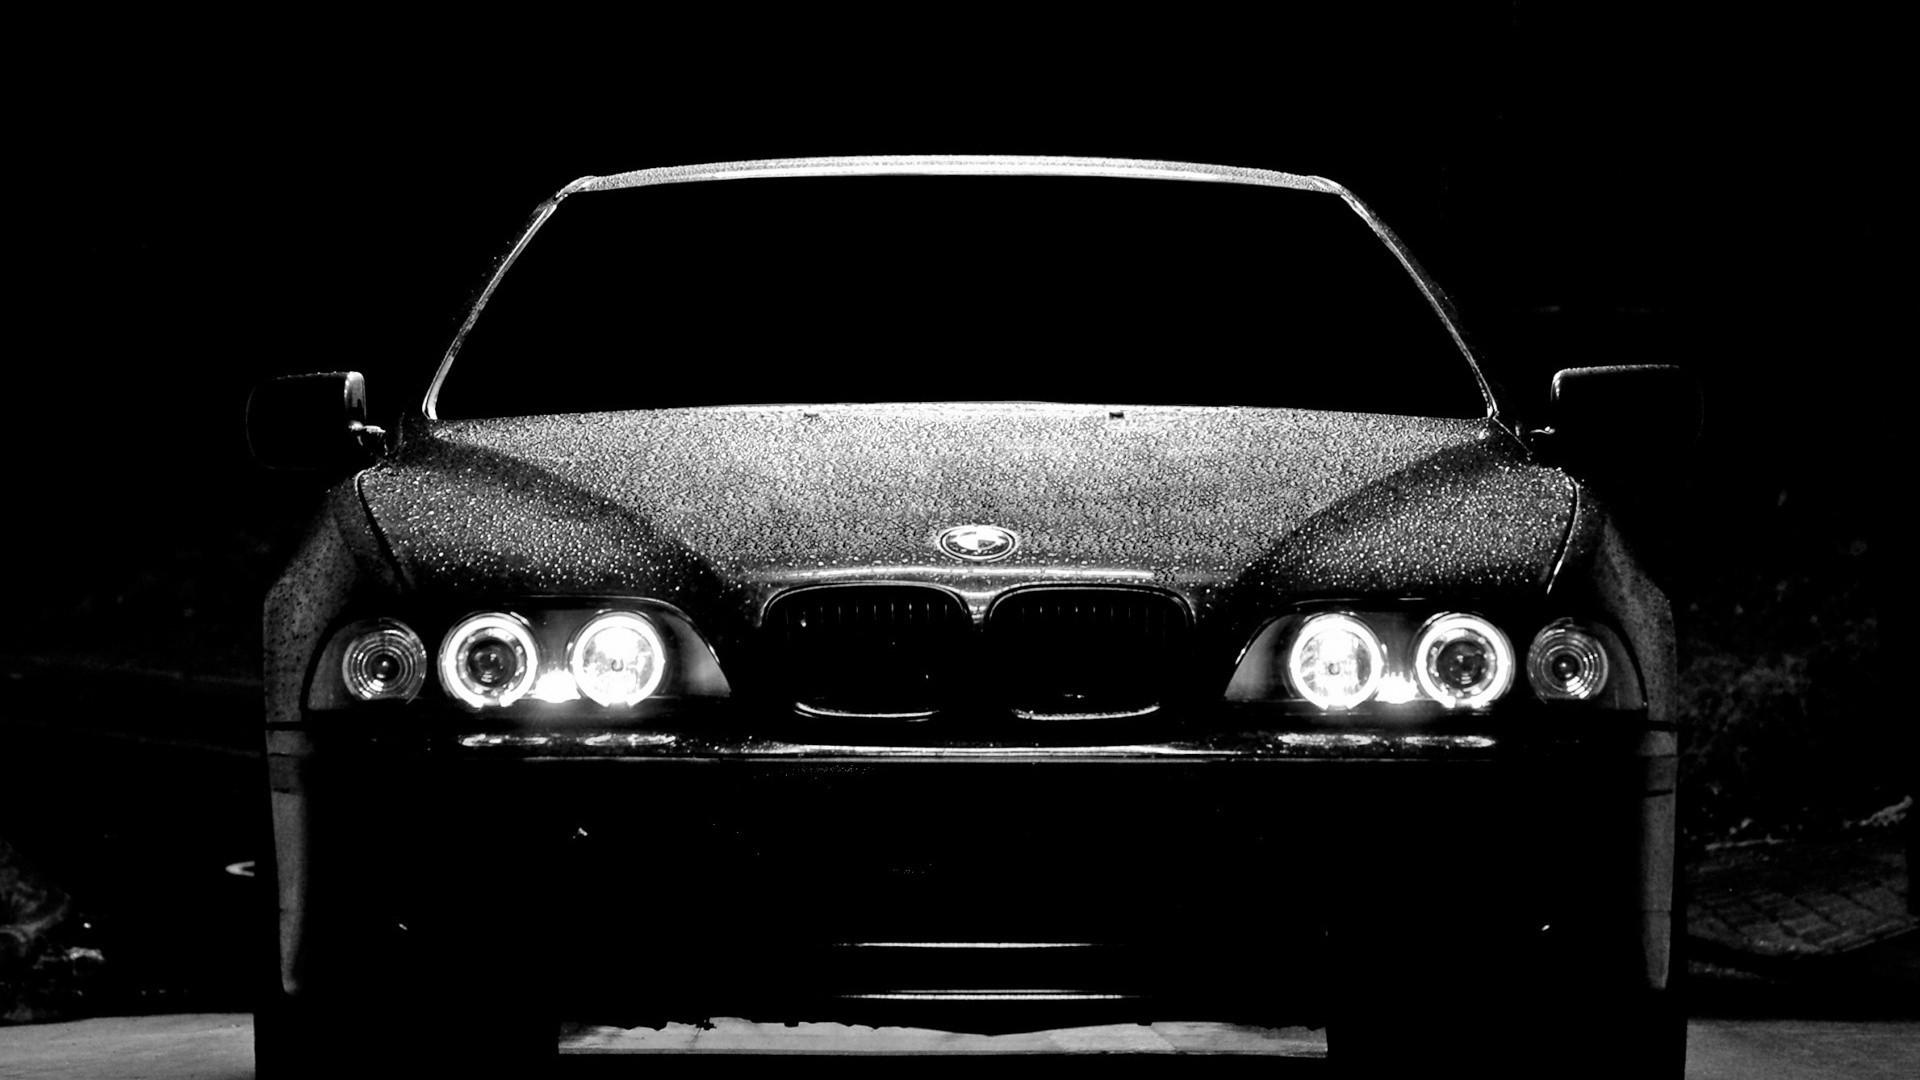 Cars bmw m5 black headlights wallpaper. PC